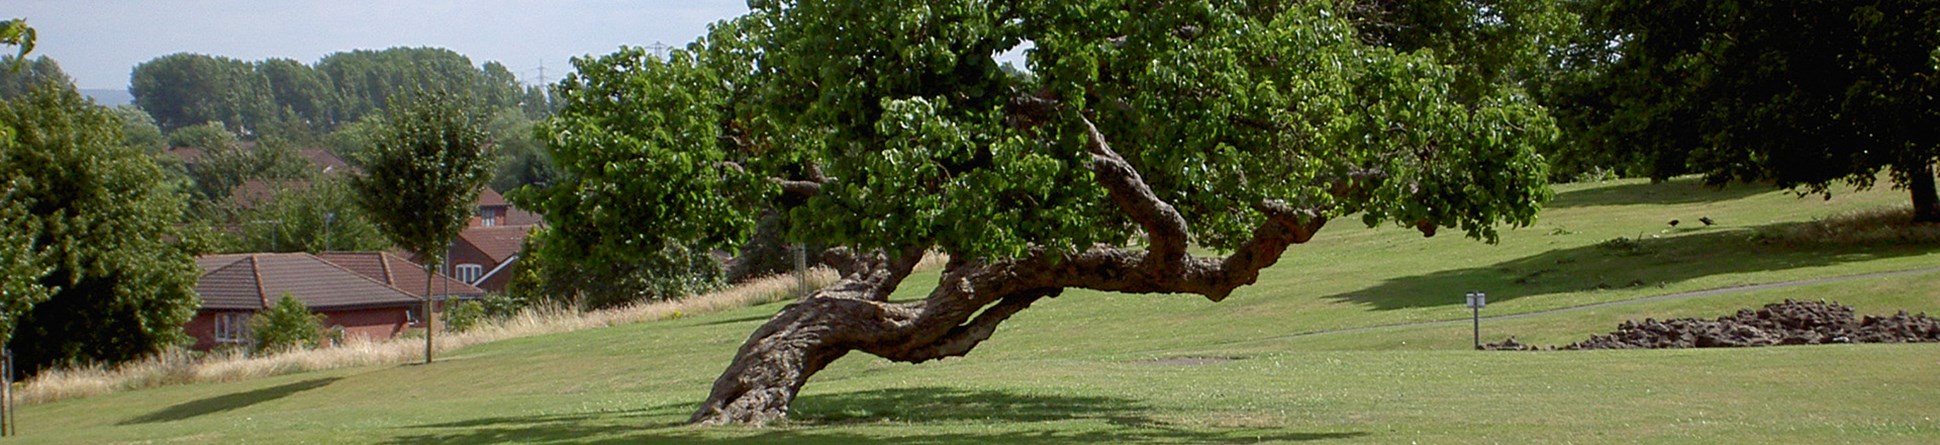 A veteran tree at Lesnes Abbey, Belvedere, London